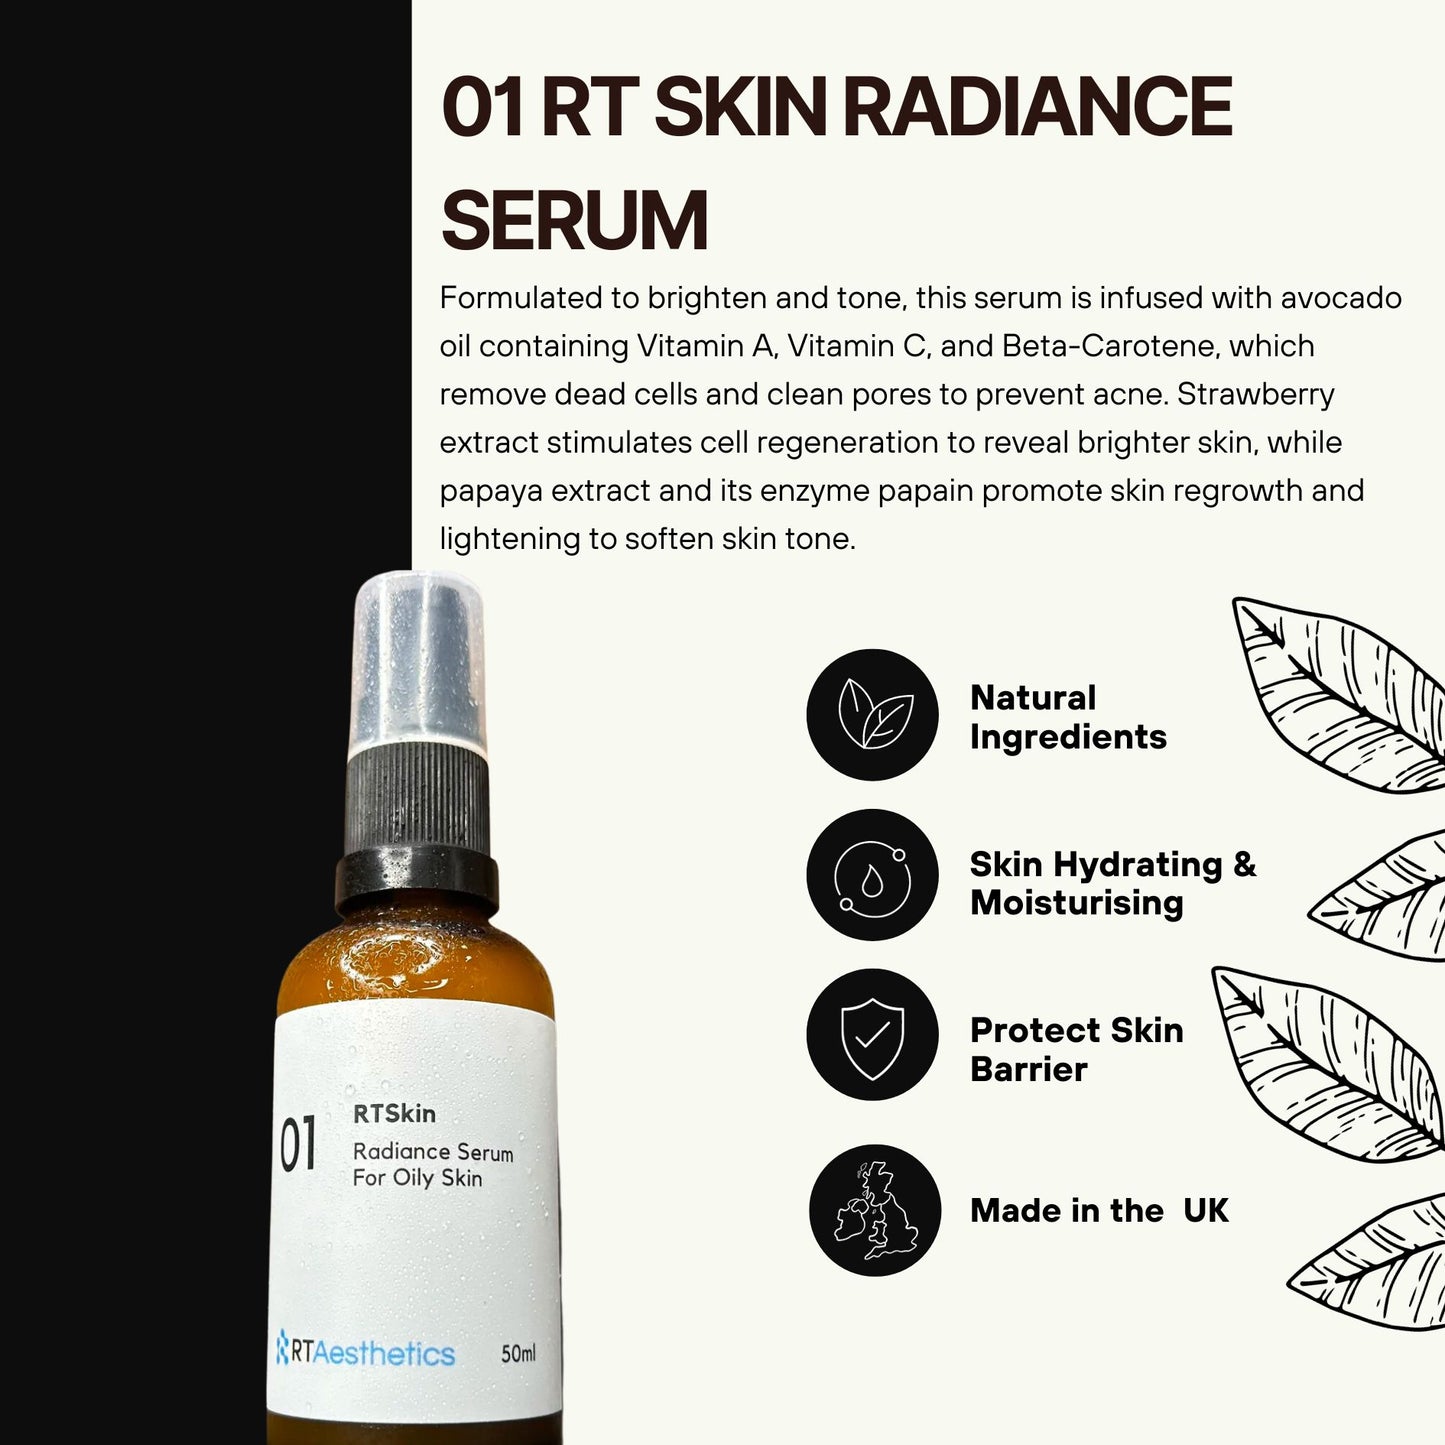 01 RT Skin Radiance Serum